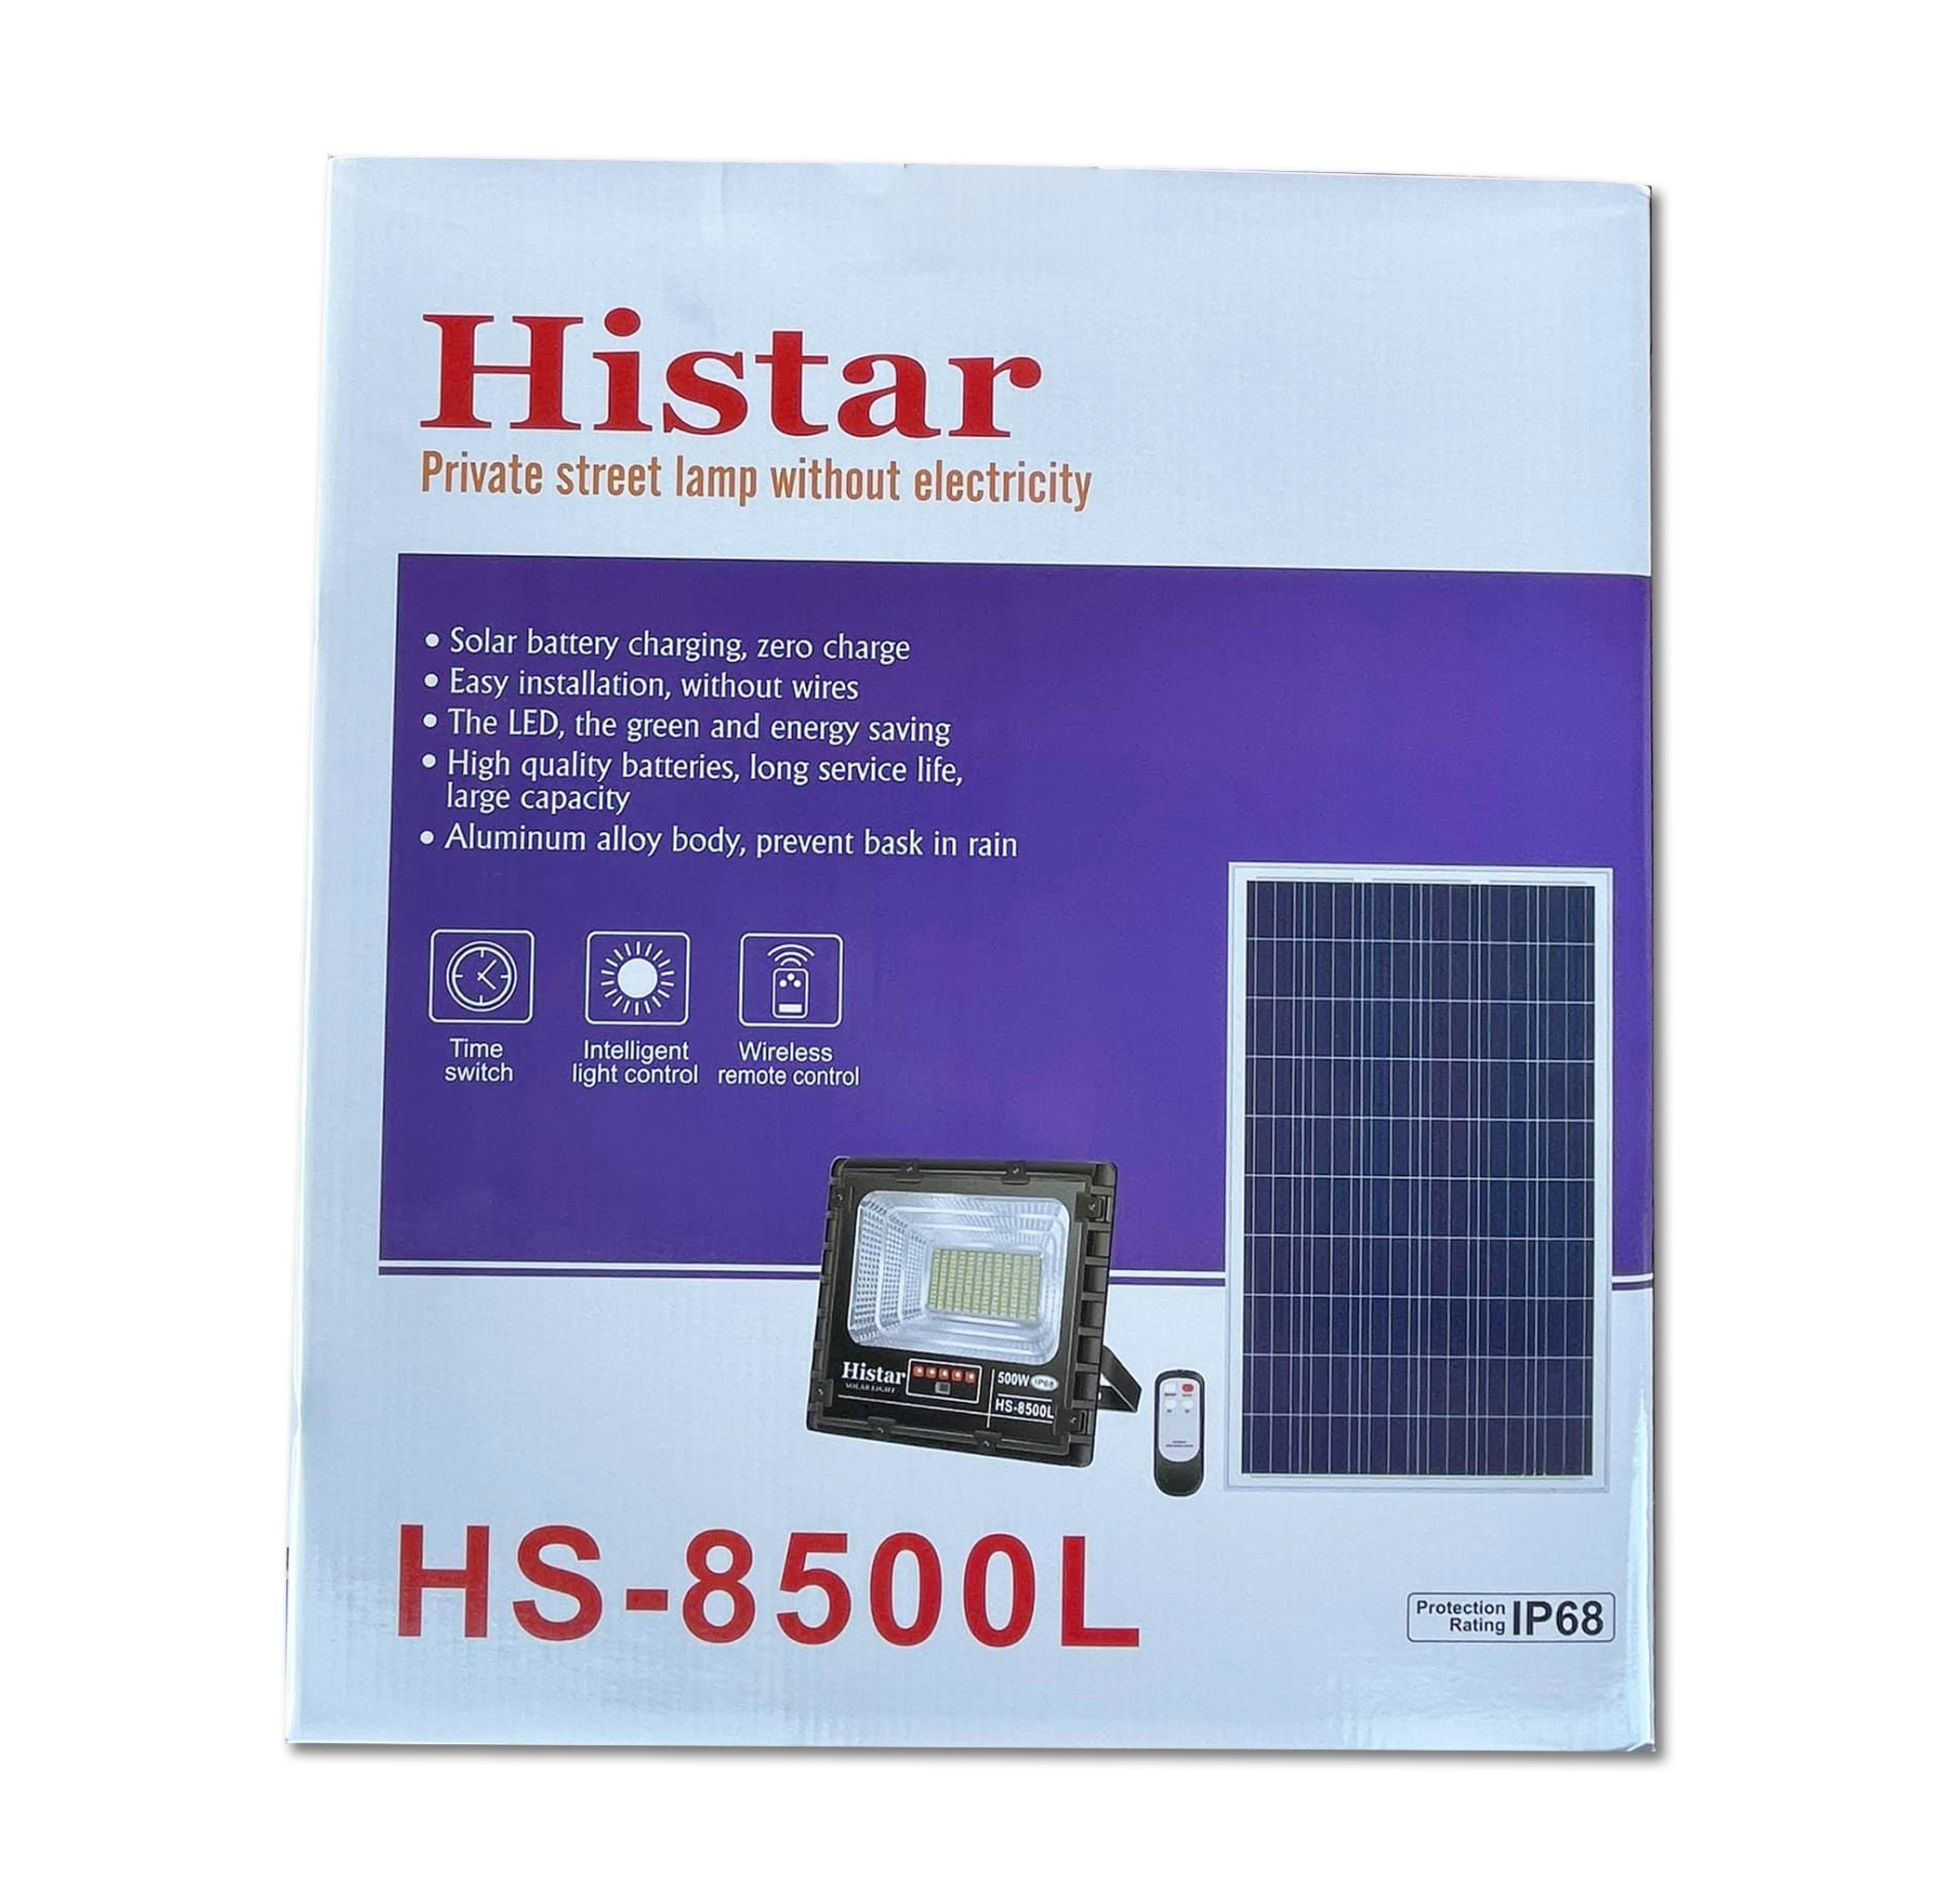 HS-8500L Histar Solar Private street lamp